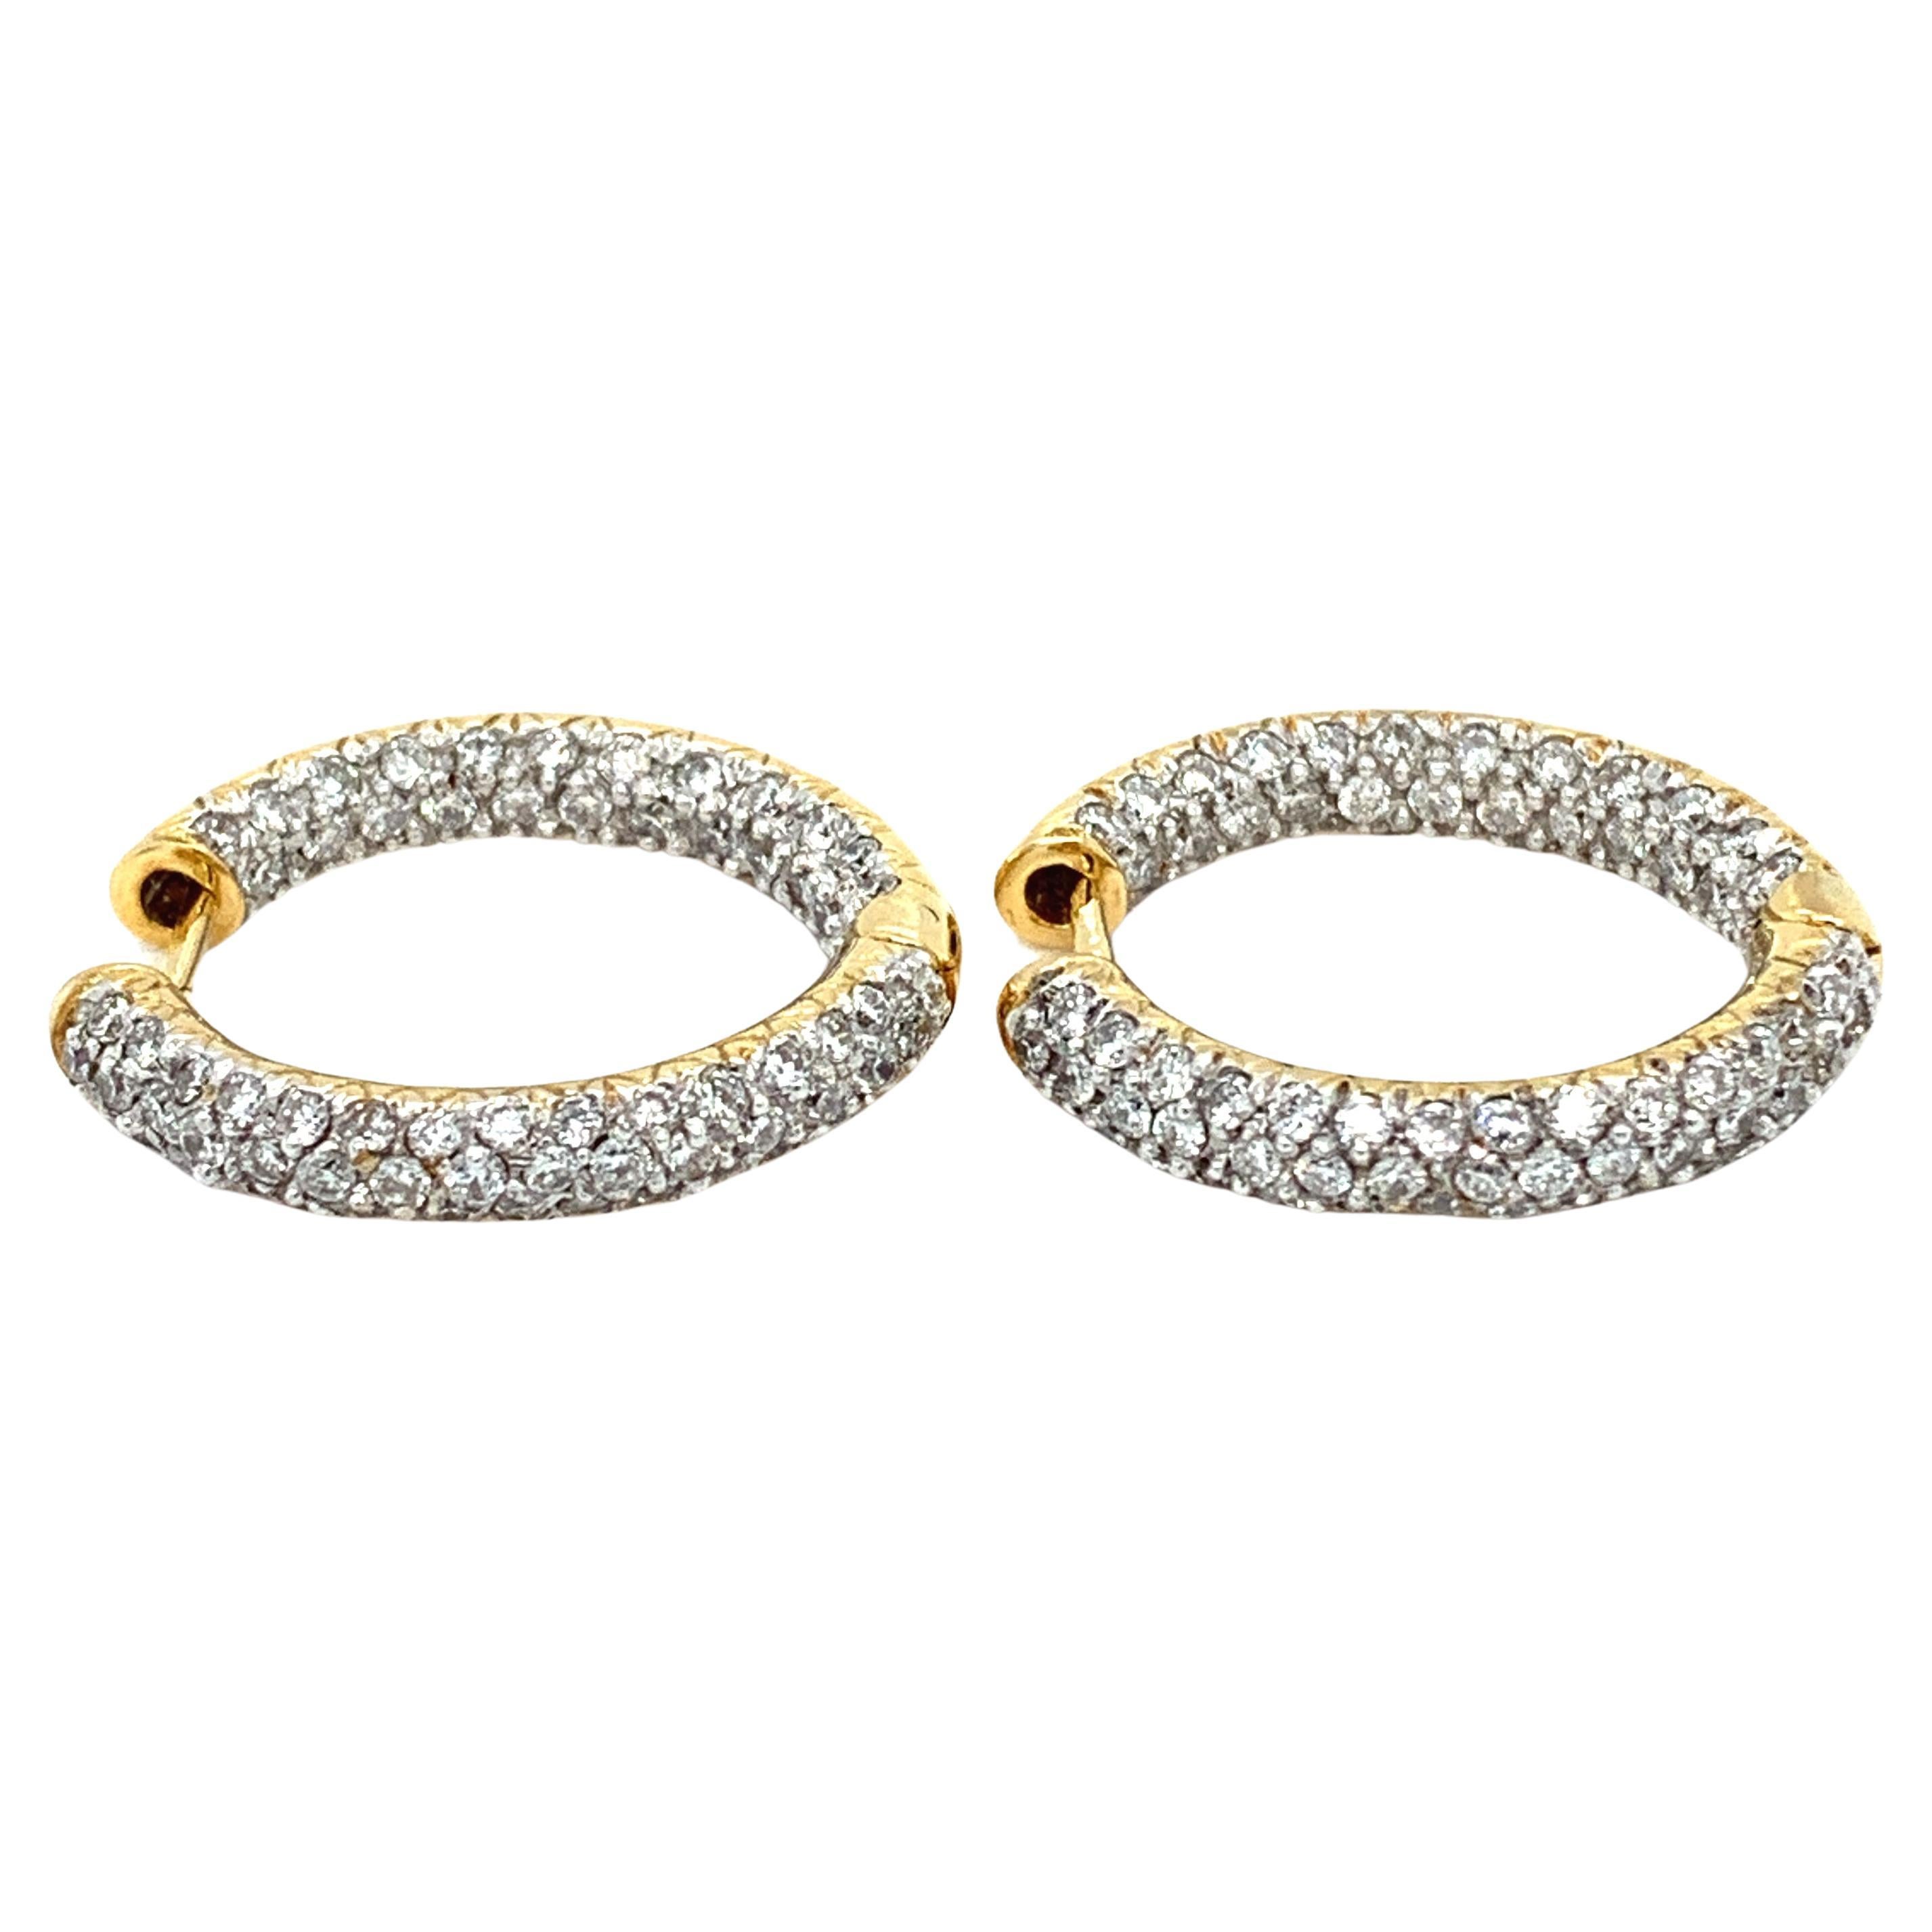 Diamond art deco hoops huggies earrings 18k yellow gold